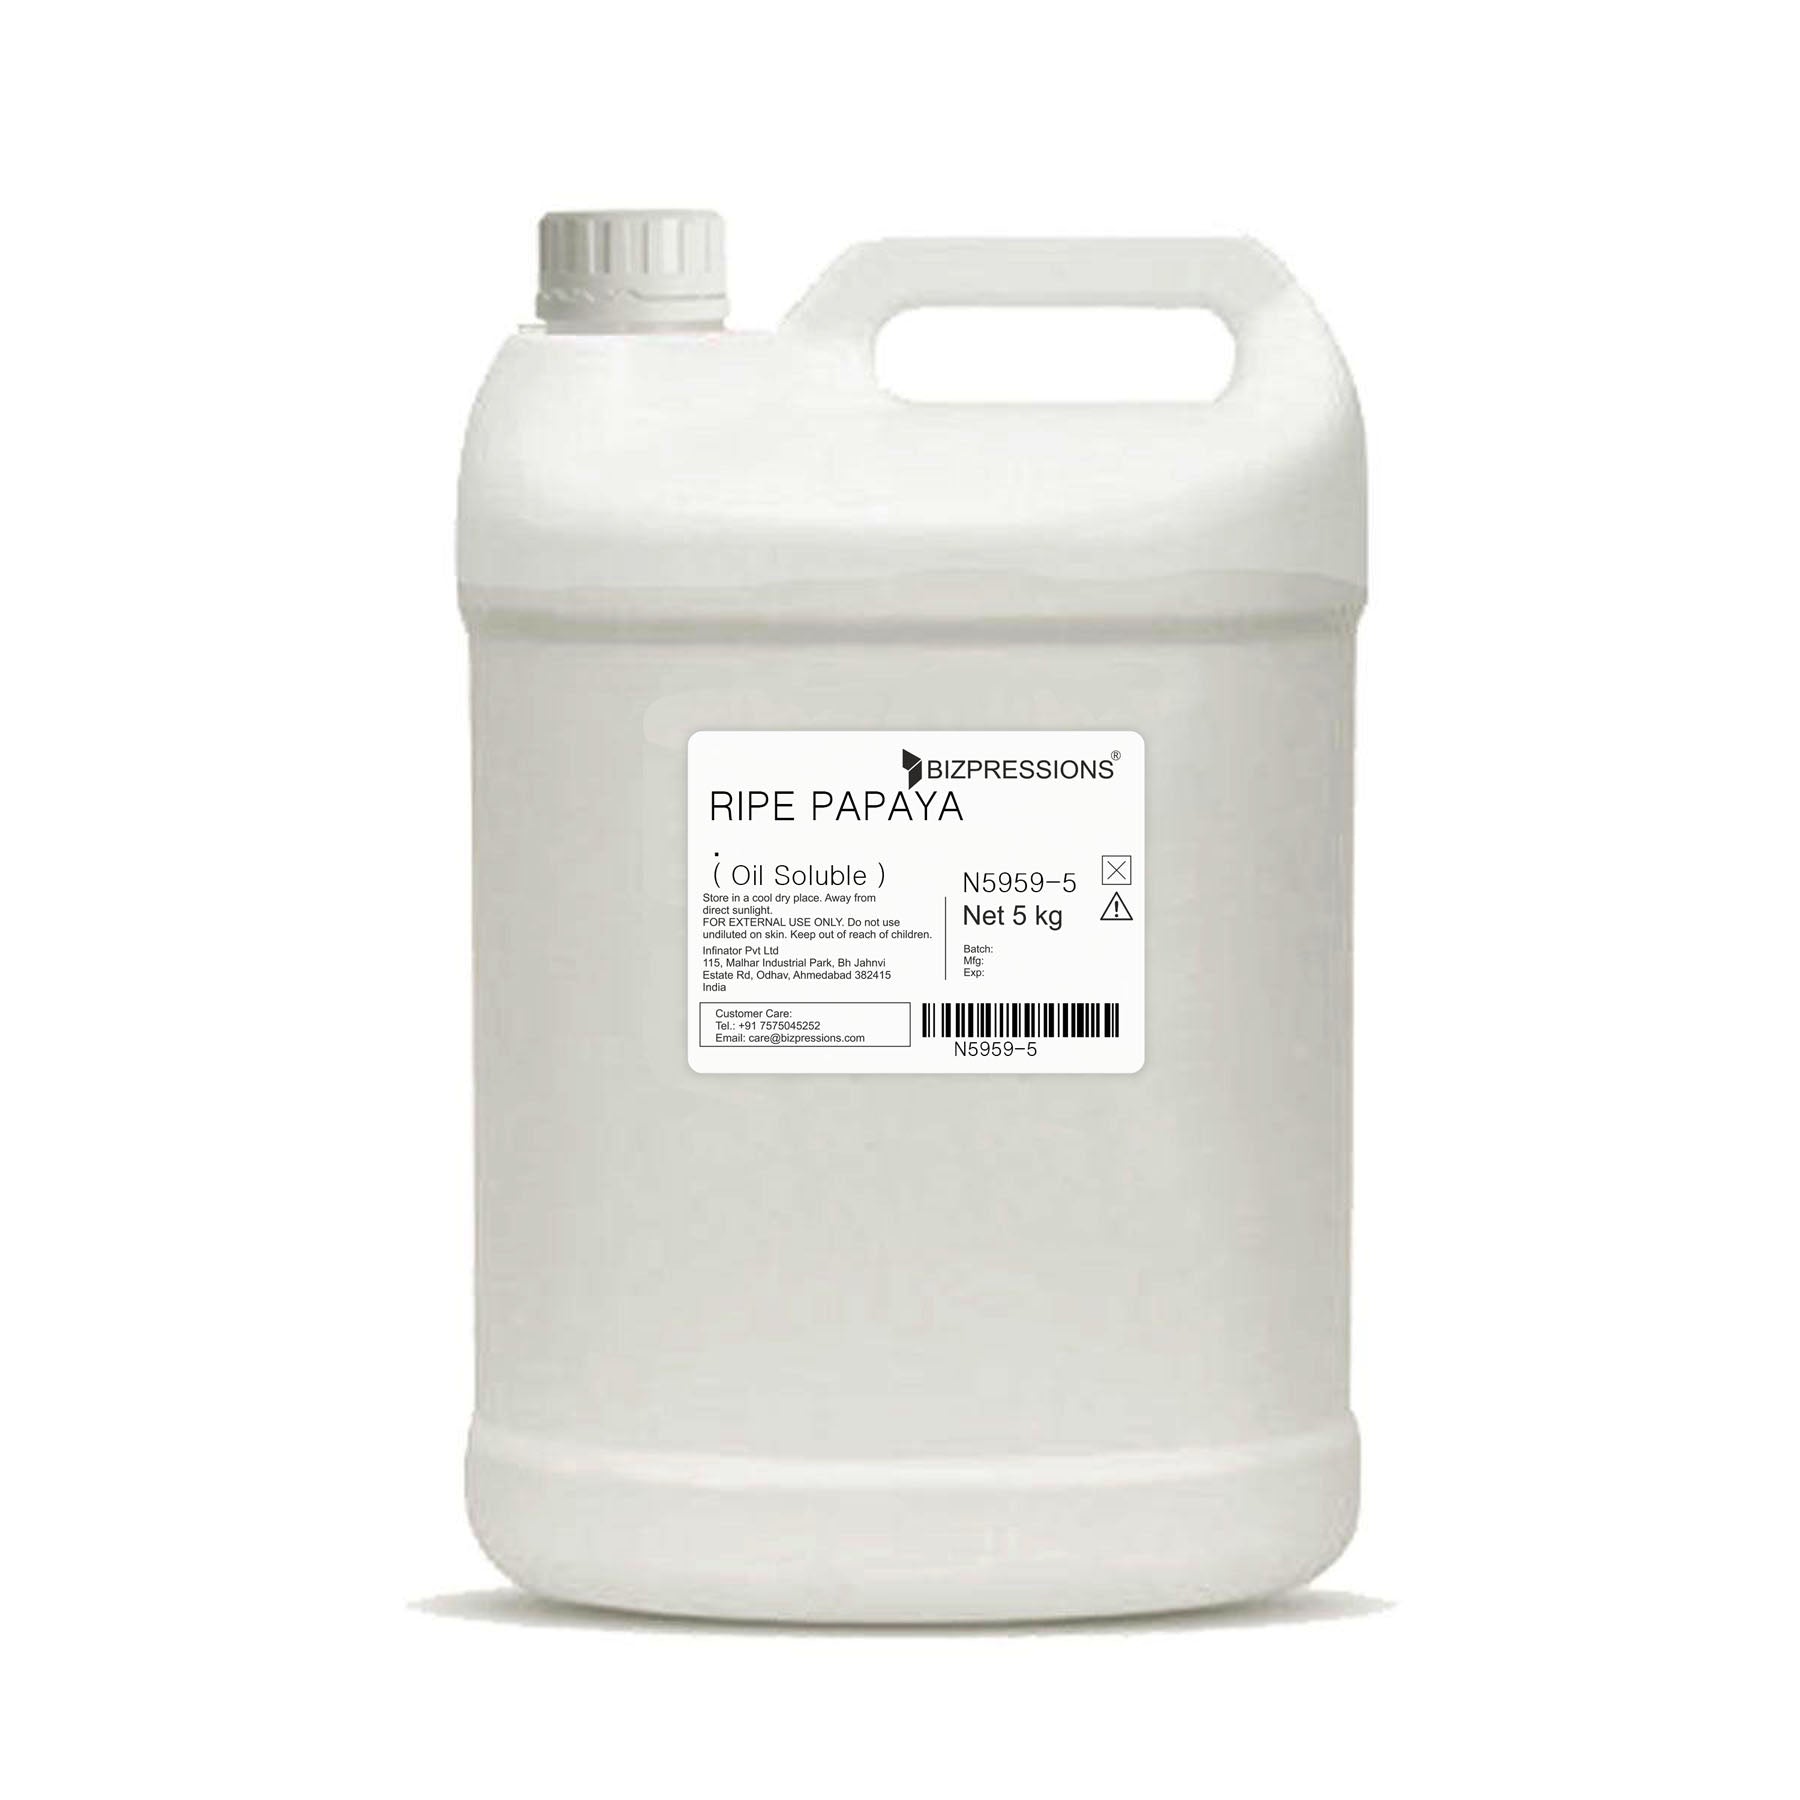 RIPE PAPAYA - Fragrance ( Oil Soluble ) - 5 kg